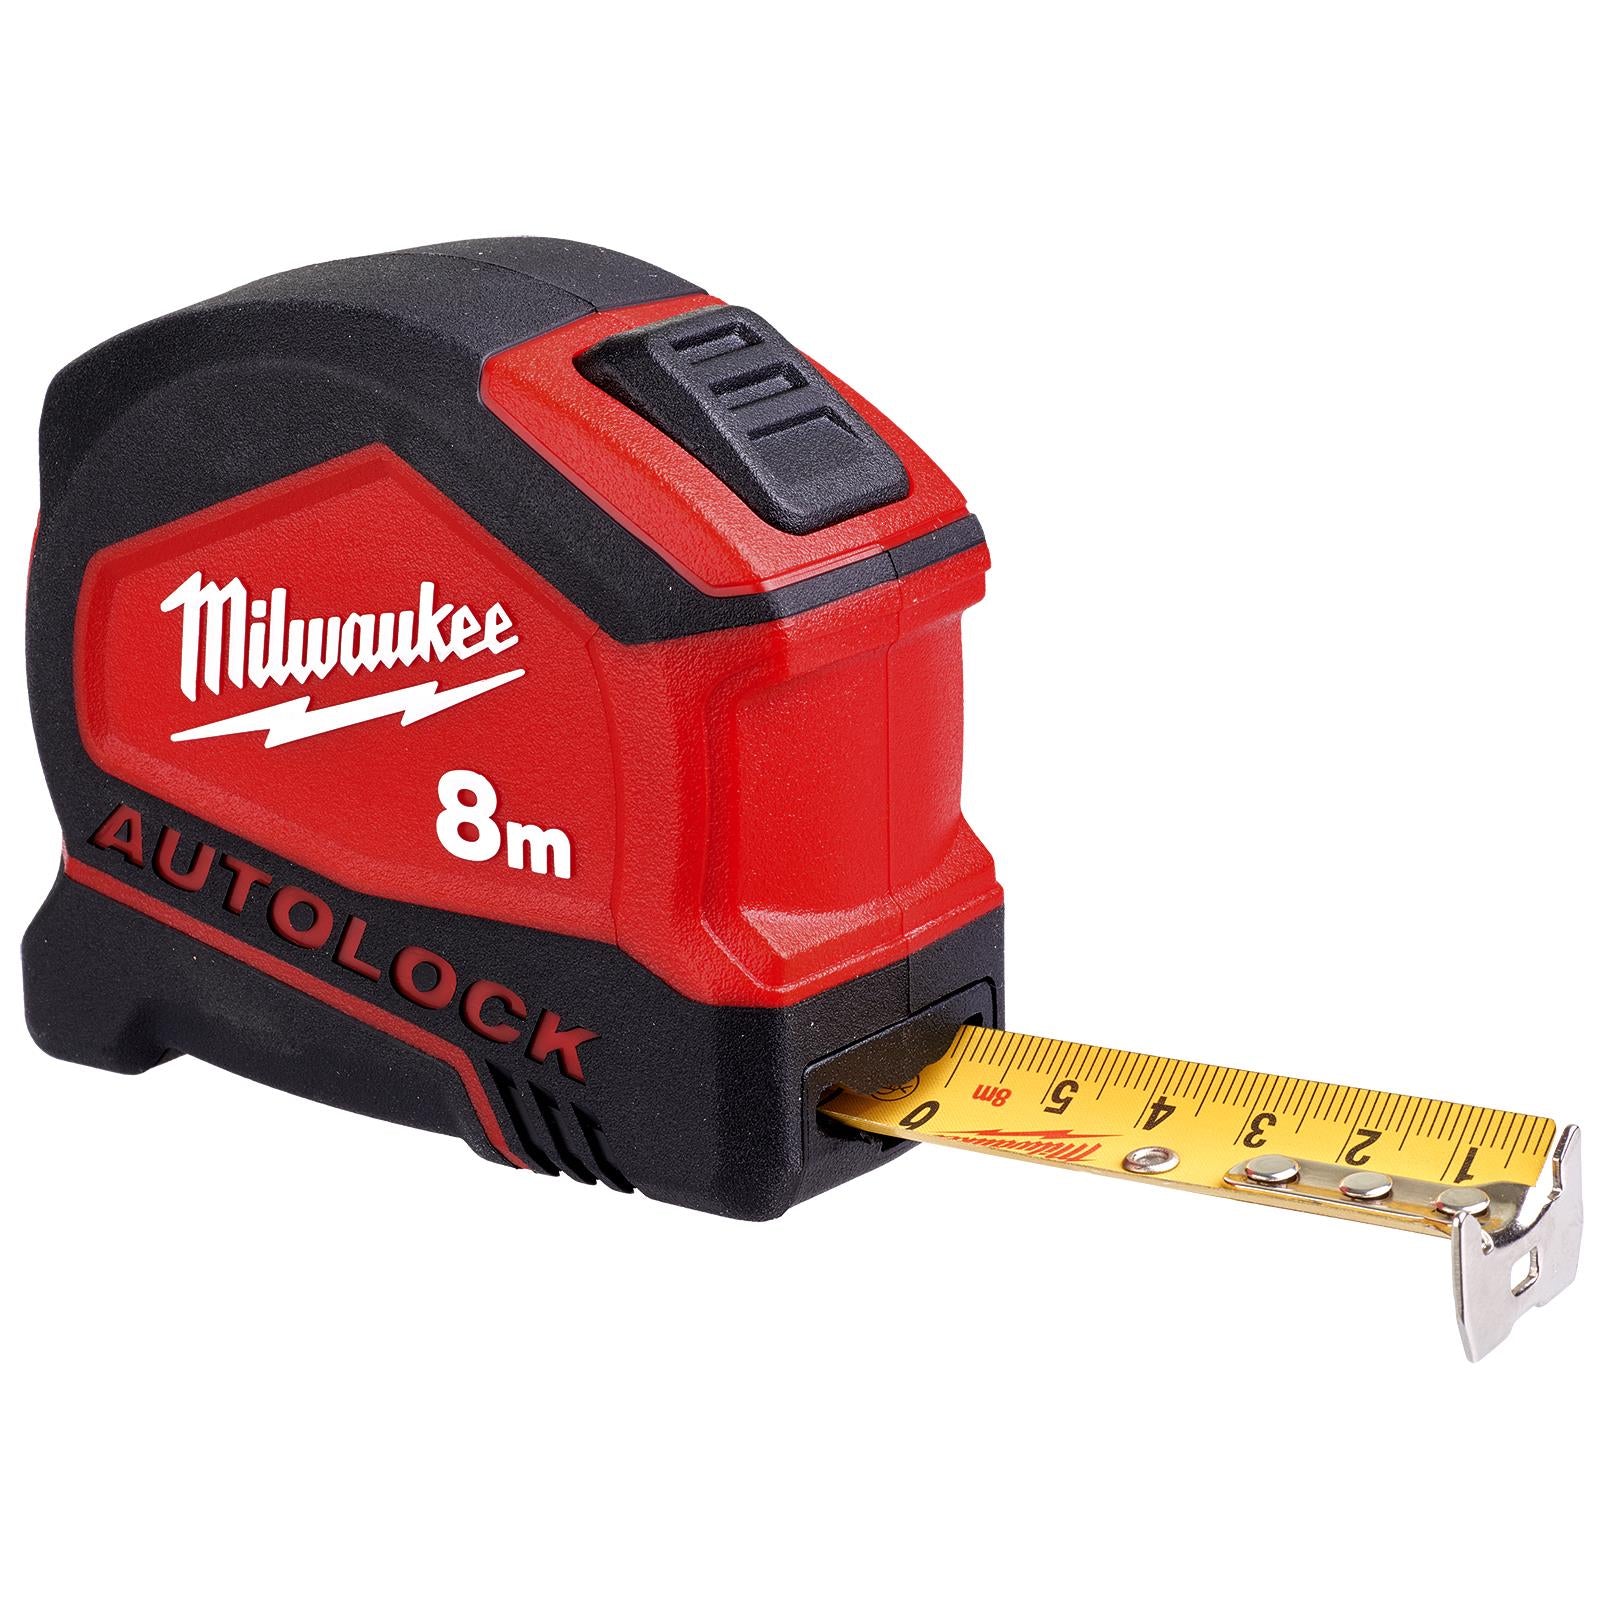 Milwaukee Tape Measure 8m 26ft Metric Imperial Autolock 25mm Blade Width